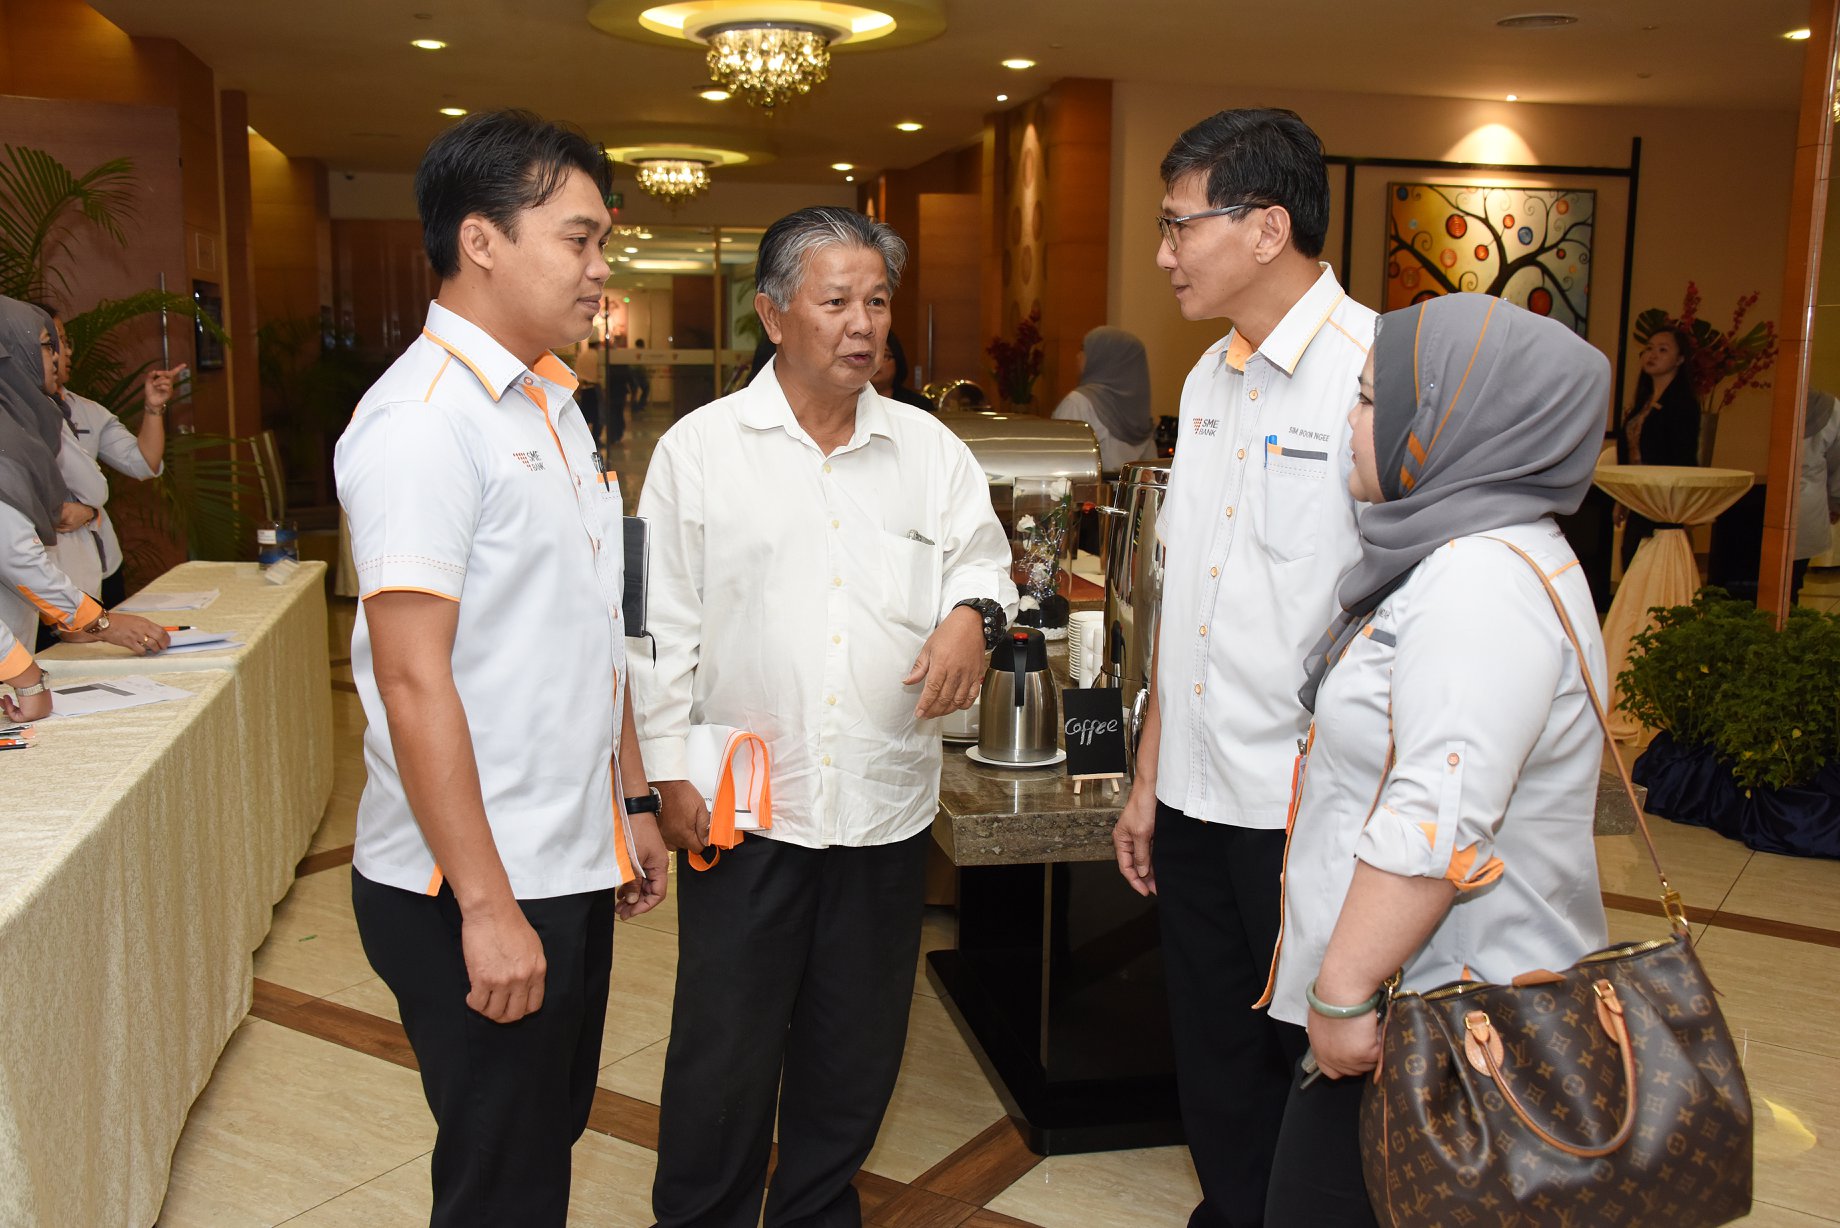 SME Bank Engagement Session 2019 (Kuching)